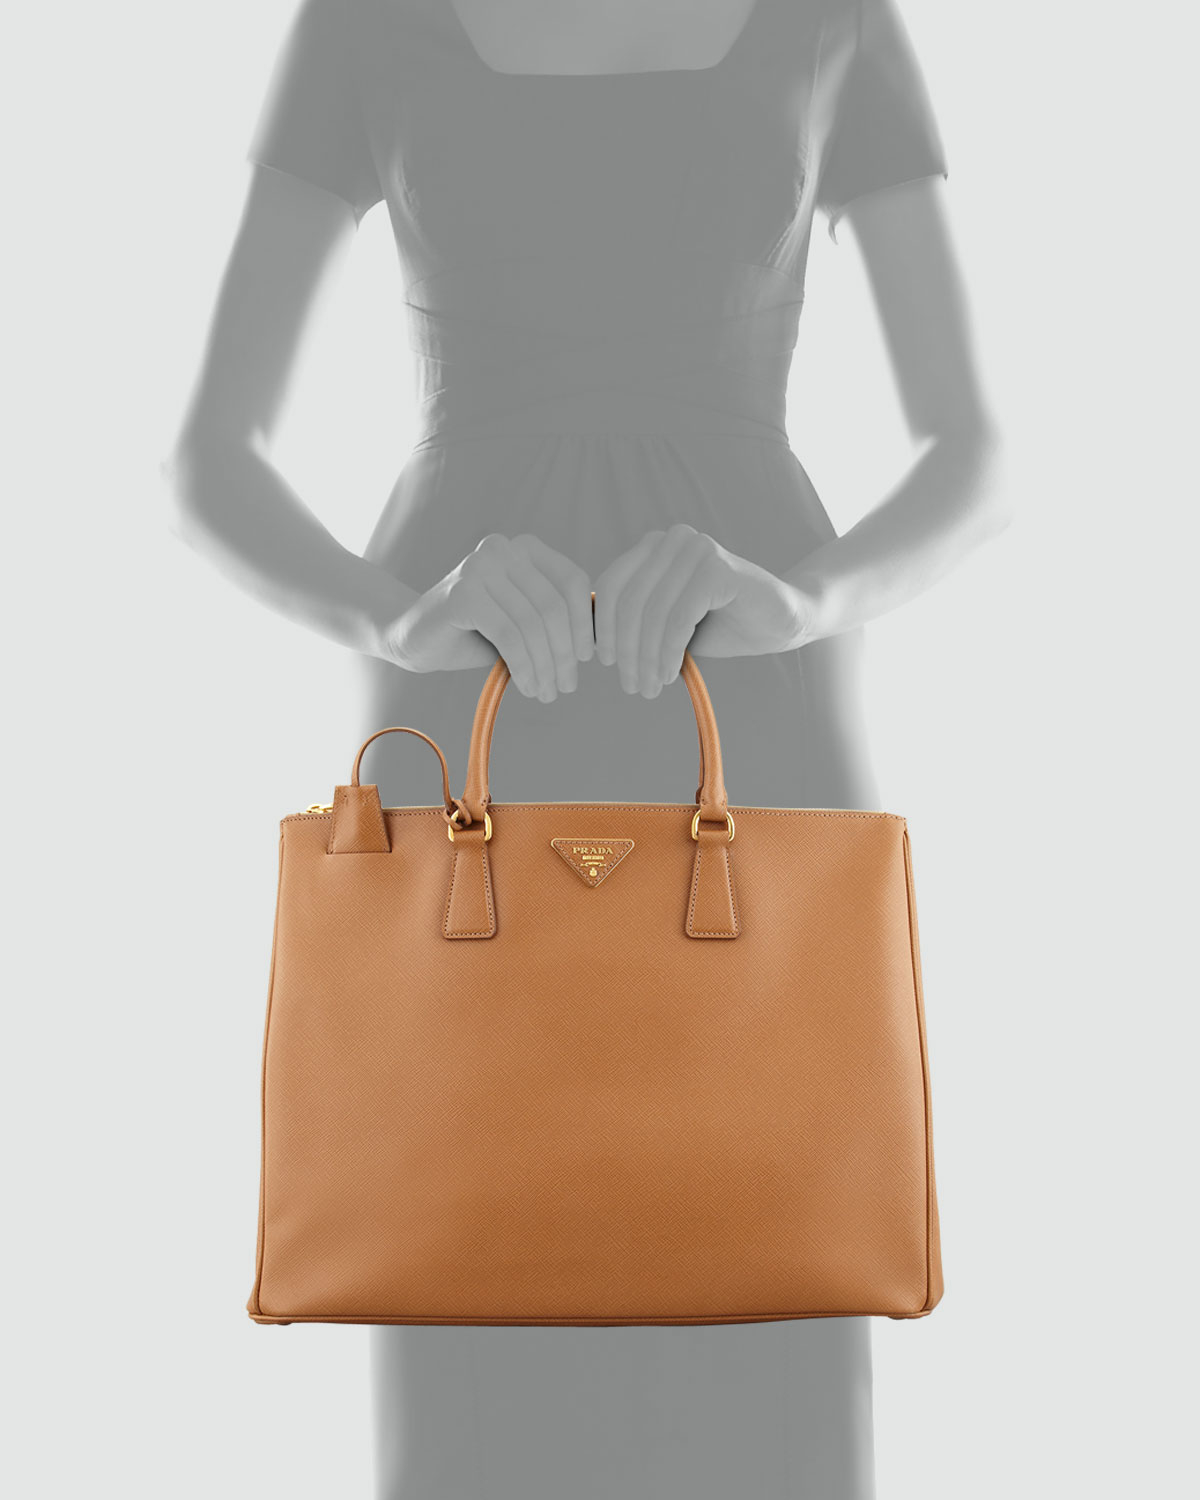 prada backpack sale - Prada Saffiano Large Executive Tote Bag in Gray (MARMO (GRAY)) | Lyst